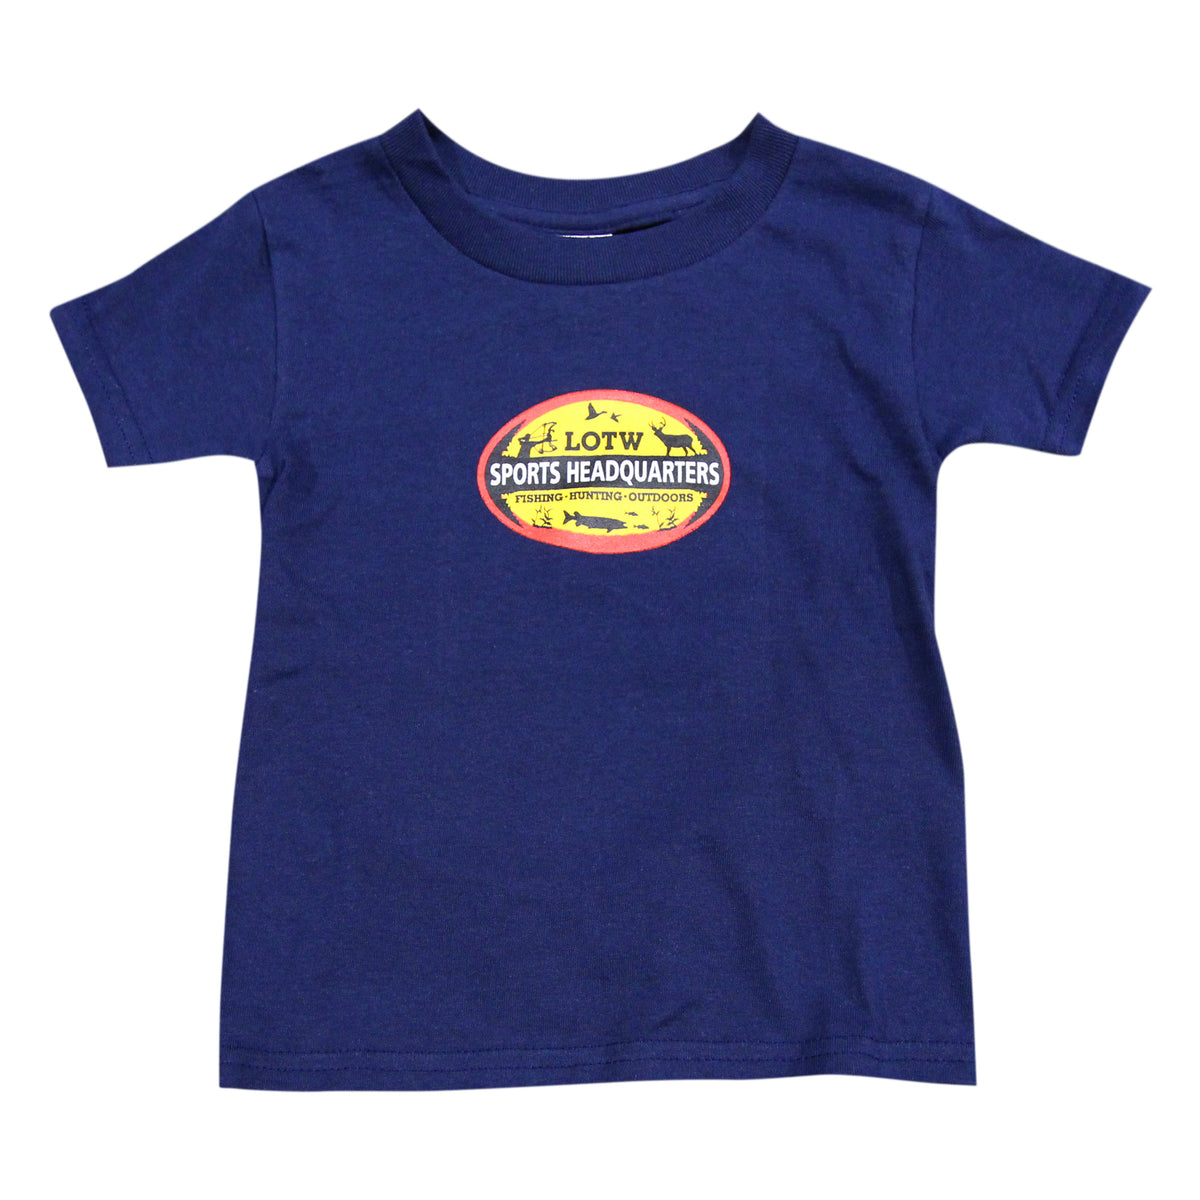 LOTW Sports Headquarters Toddler T-Shirt - Dark Blue